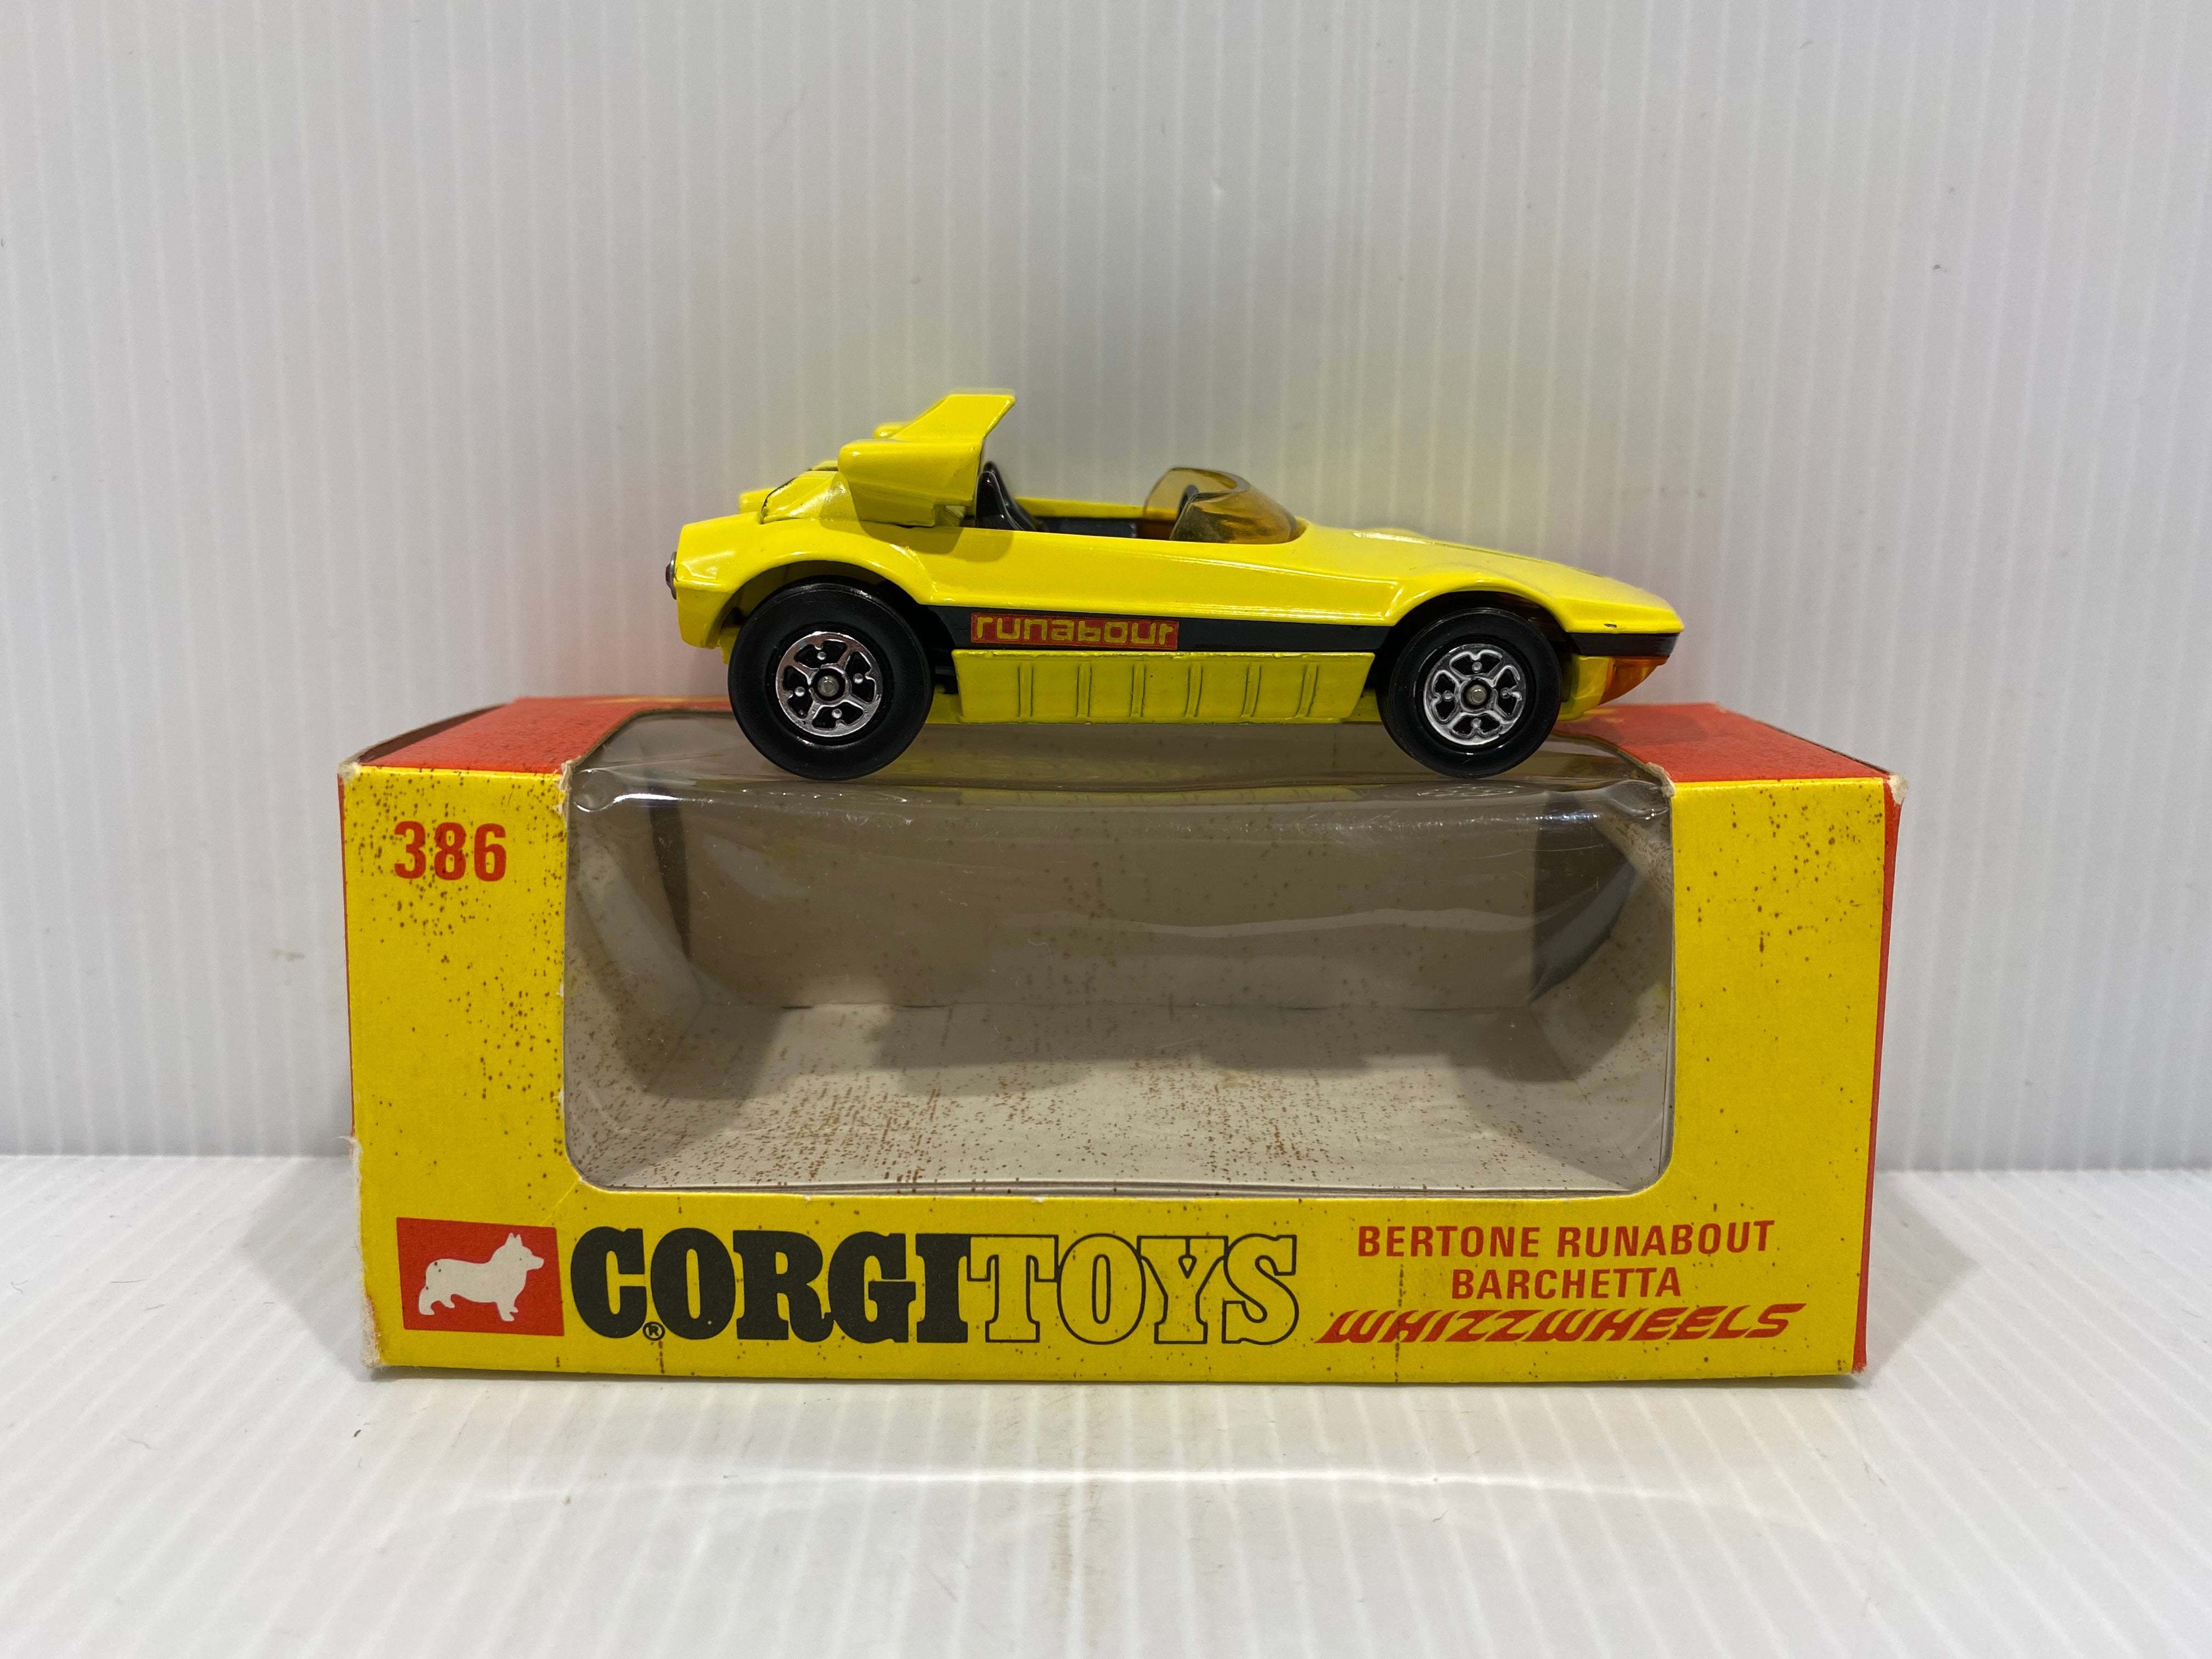 Corgi Toys GB n ° 386 Whizzwheels Bertone Runabout Barchetta. Yellow and Black in box .